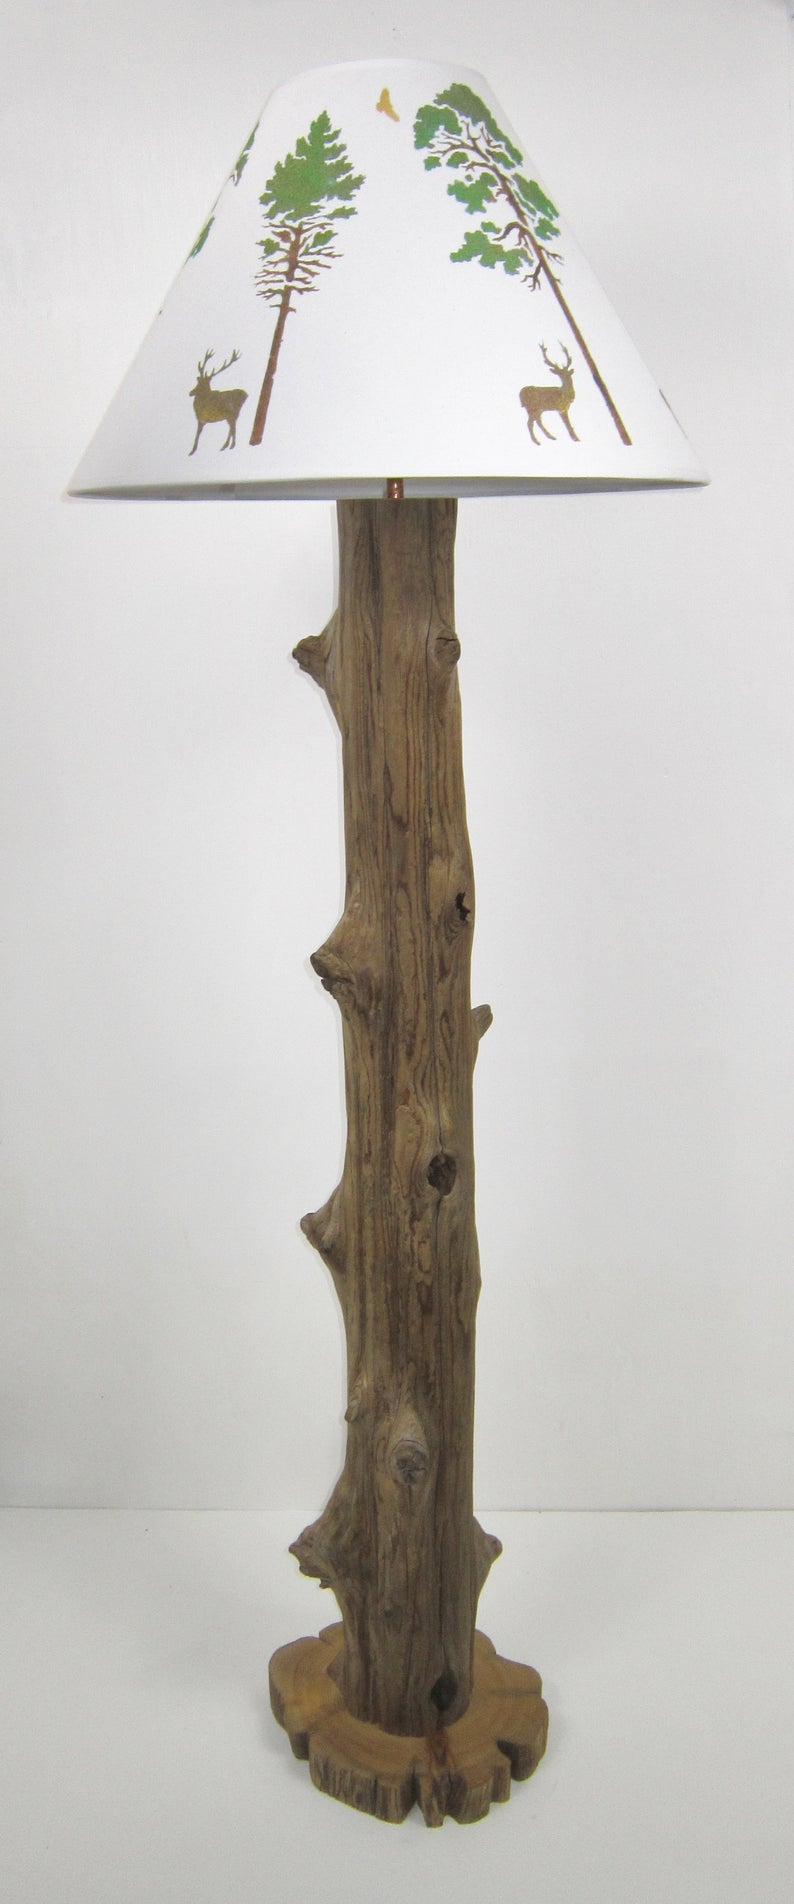 Unique Driftwood Floor Lamp Natural Rustic Decor From Antique Riverwood regarding dimensions 794 X 1904